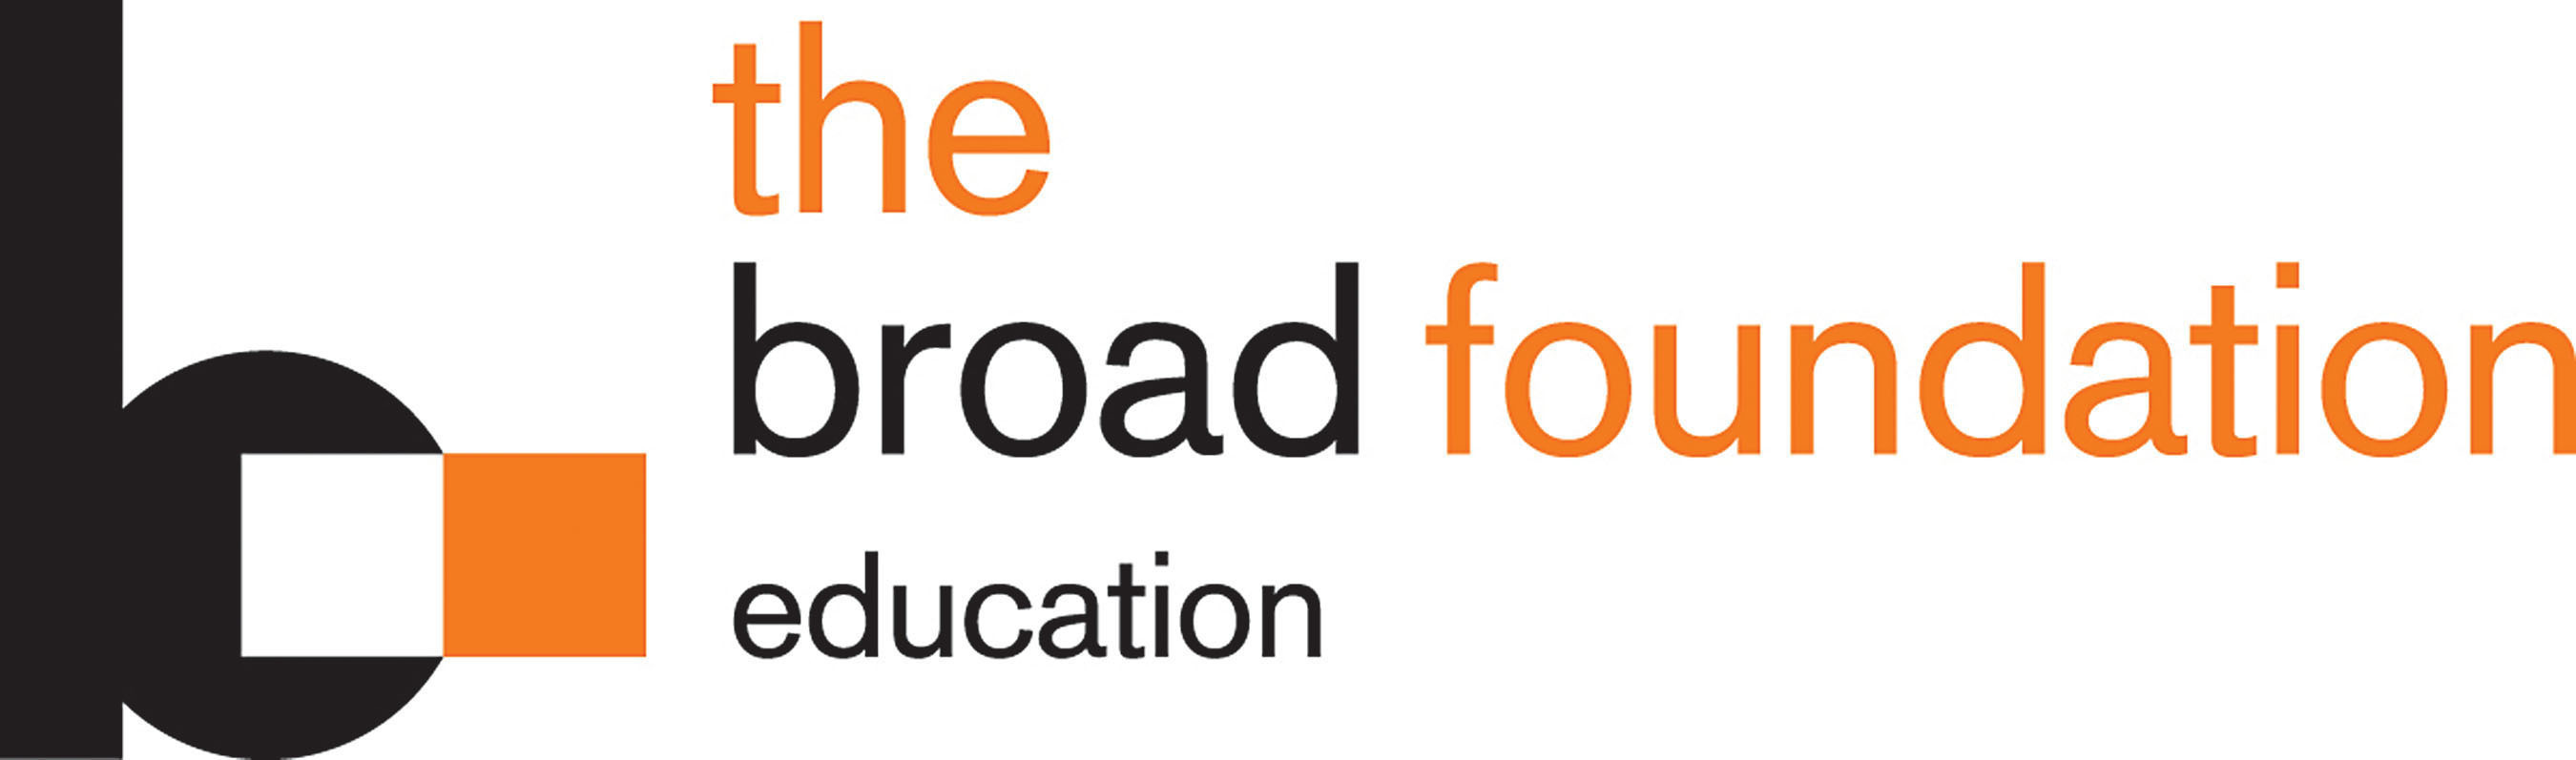 Broad Foundation logo. (PRNewsFoto/The Eli and Edythe Broad Foundation) (PRNewsFoto/)